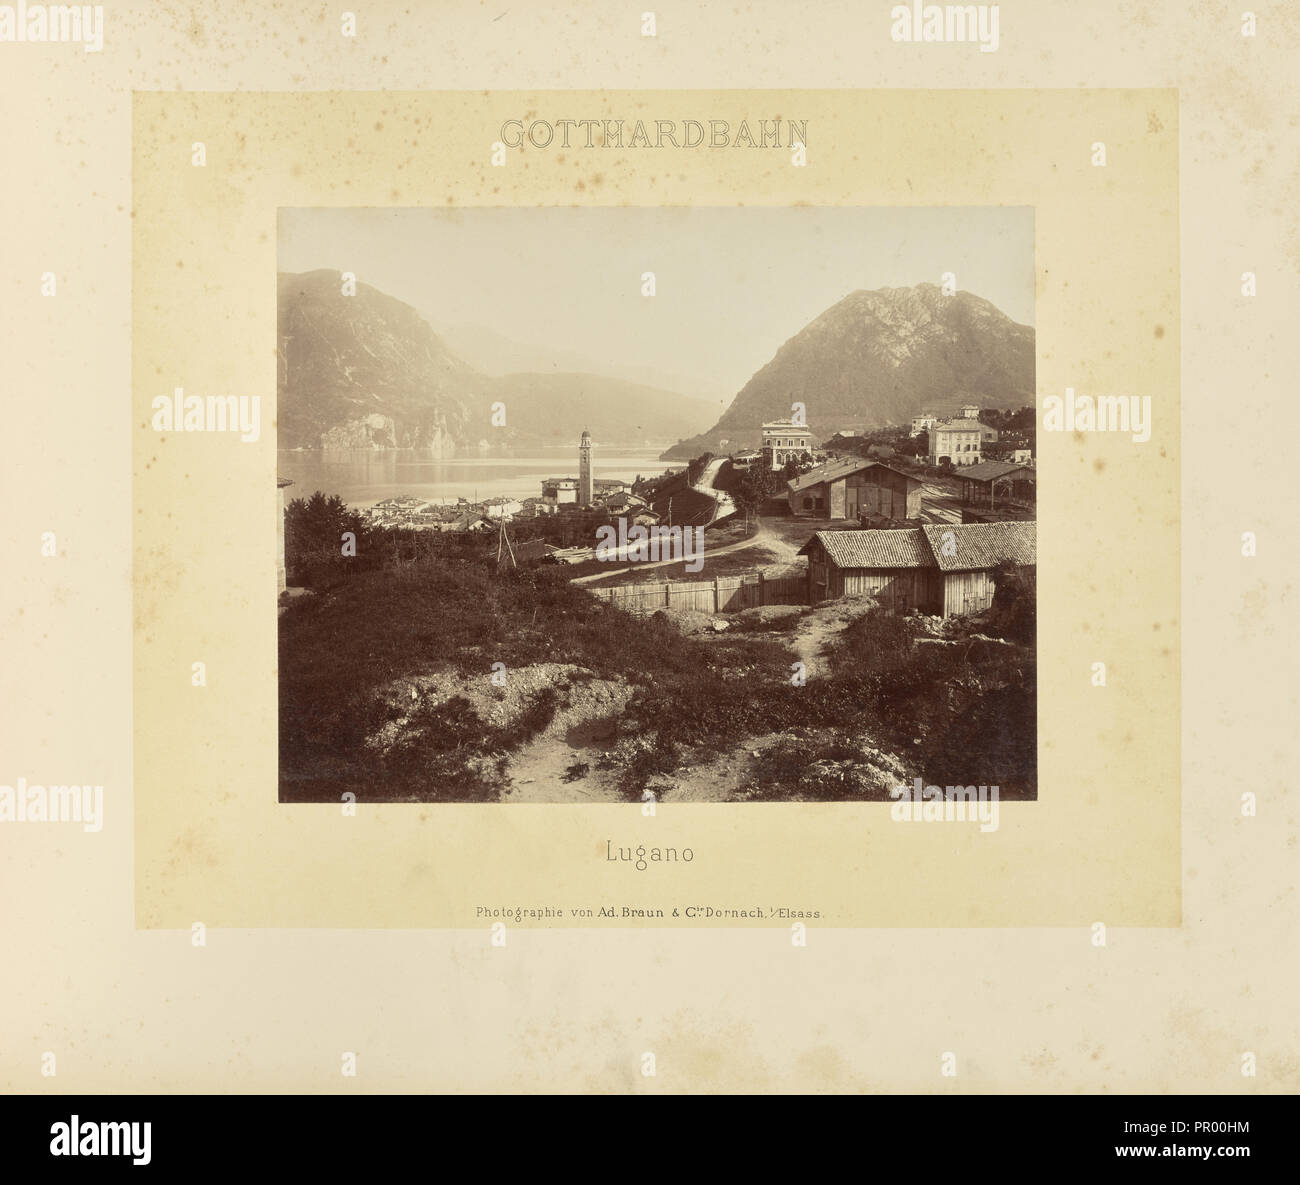 Gotthardbahn Lugano; Adolphe Braun & Cie, French, 1876 - 1889, Dornach,  France; about 1875–1882; Albumen silver print Stock Photo - Alamy